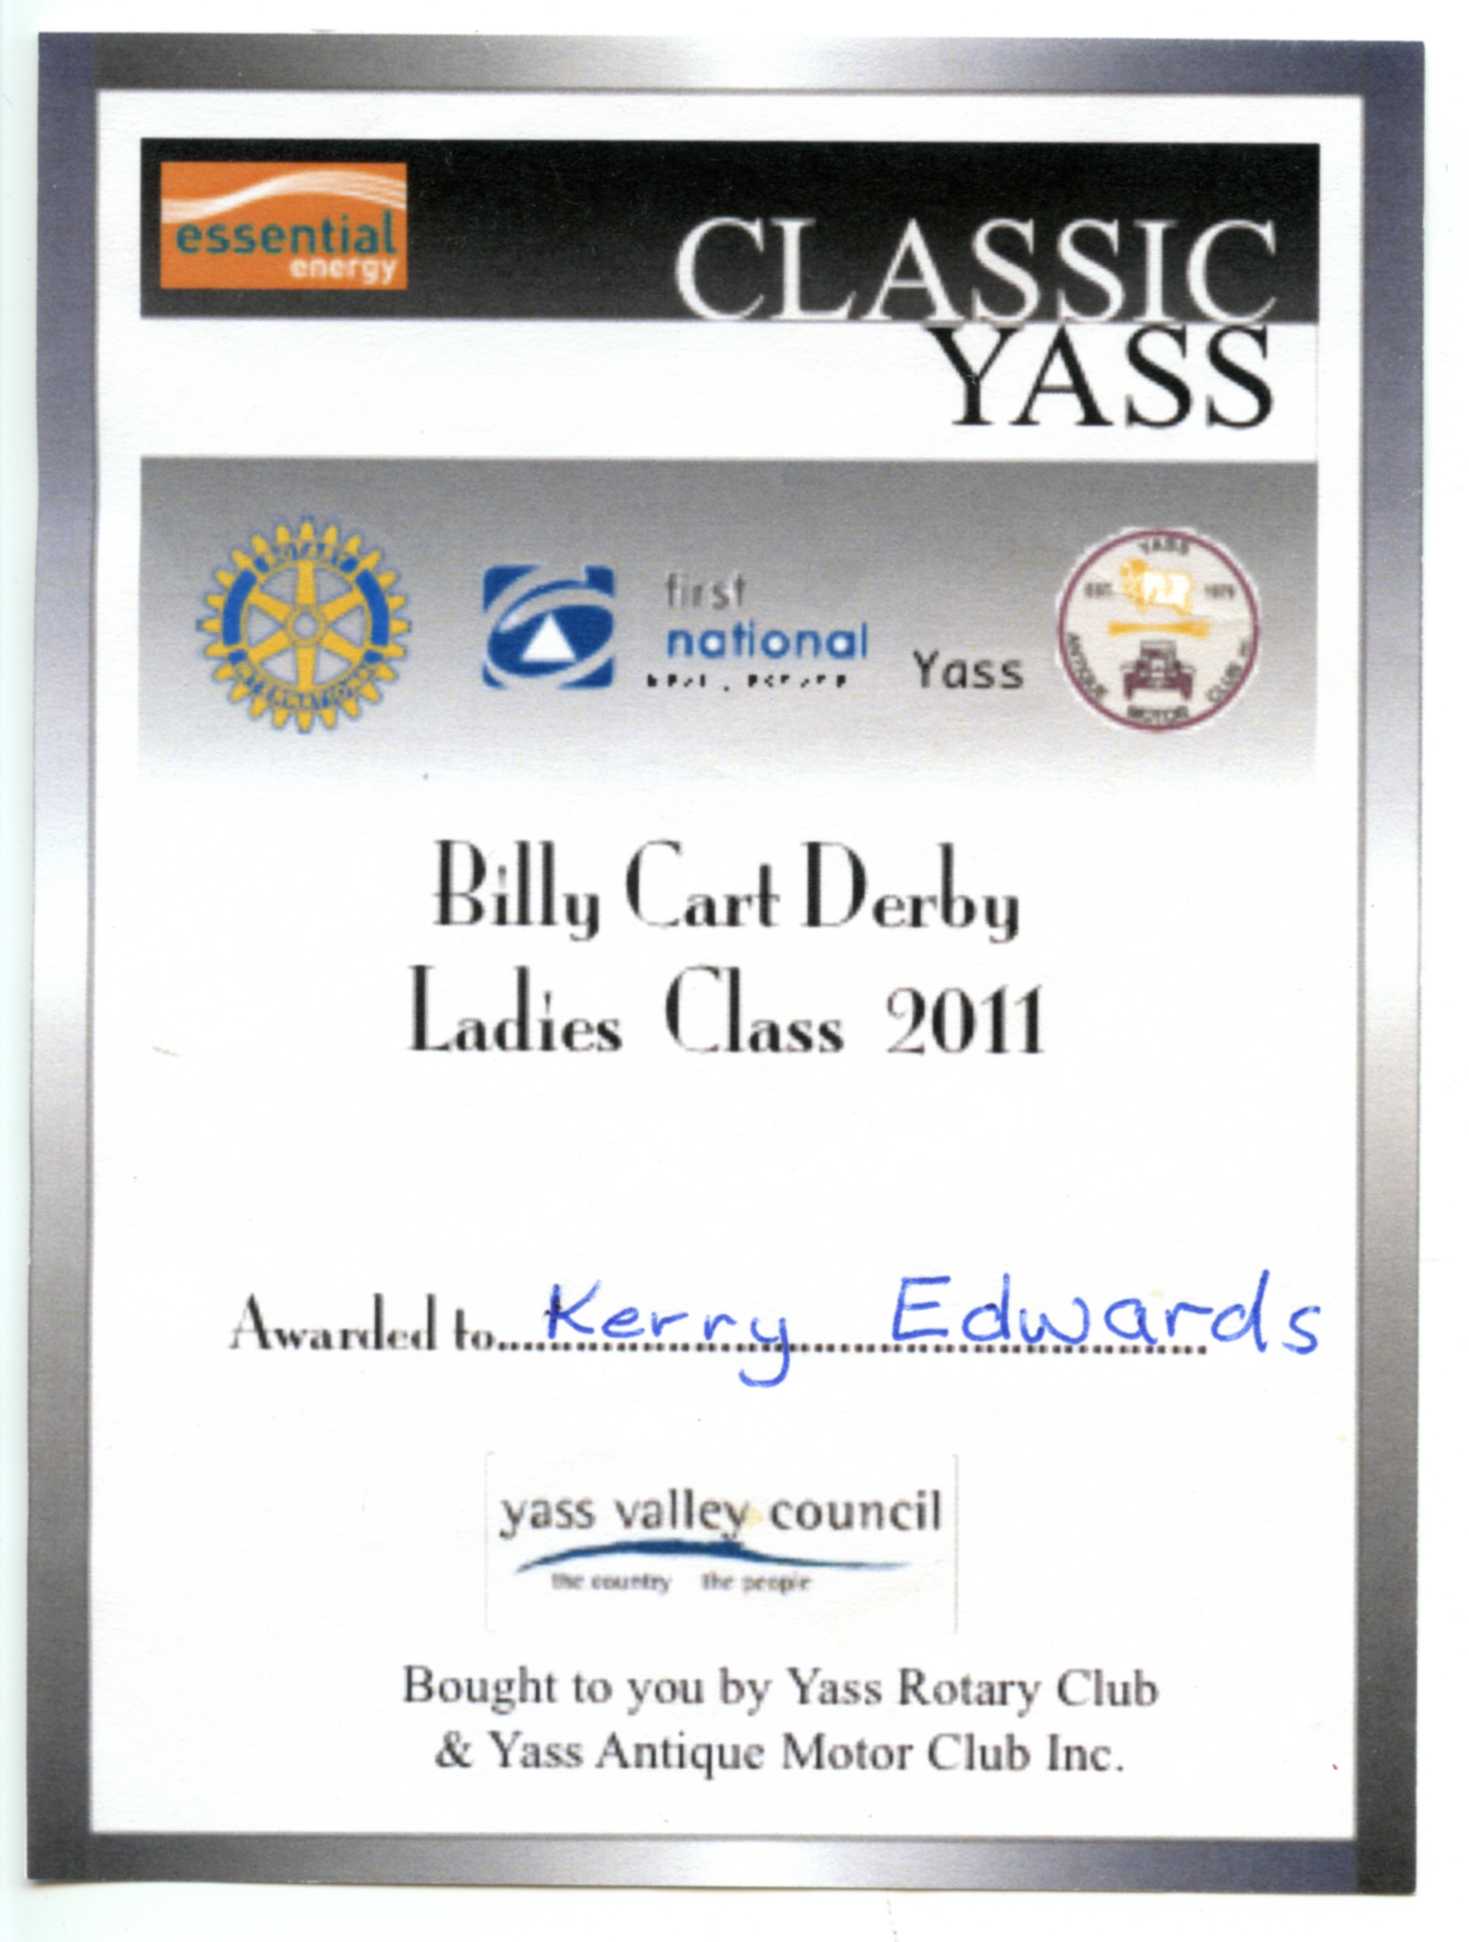 Kerry's certificate YASS 2011